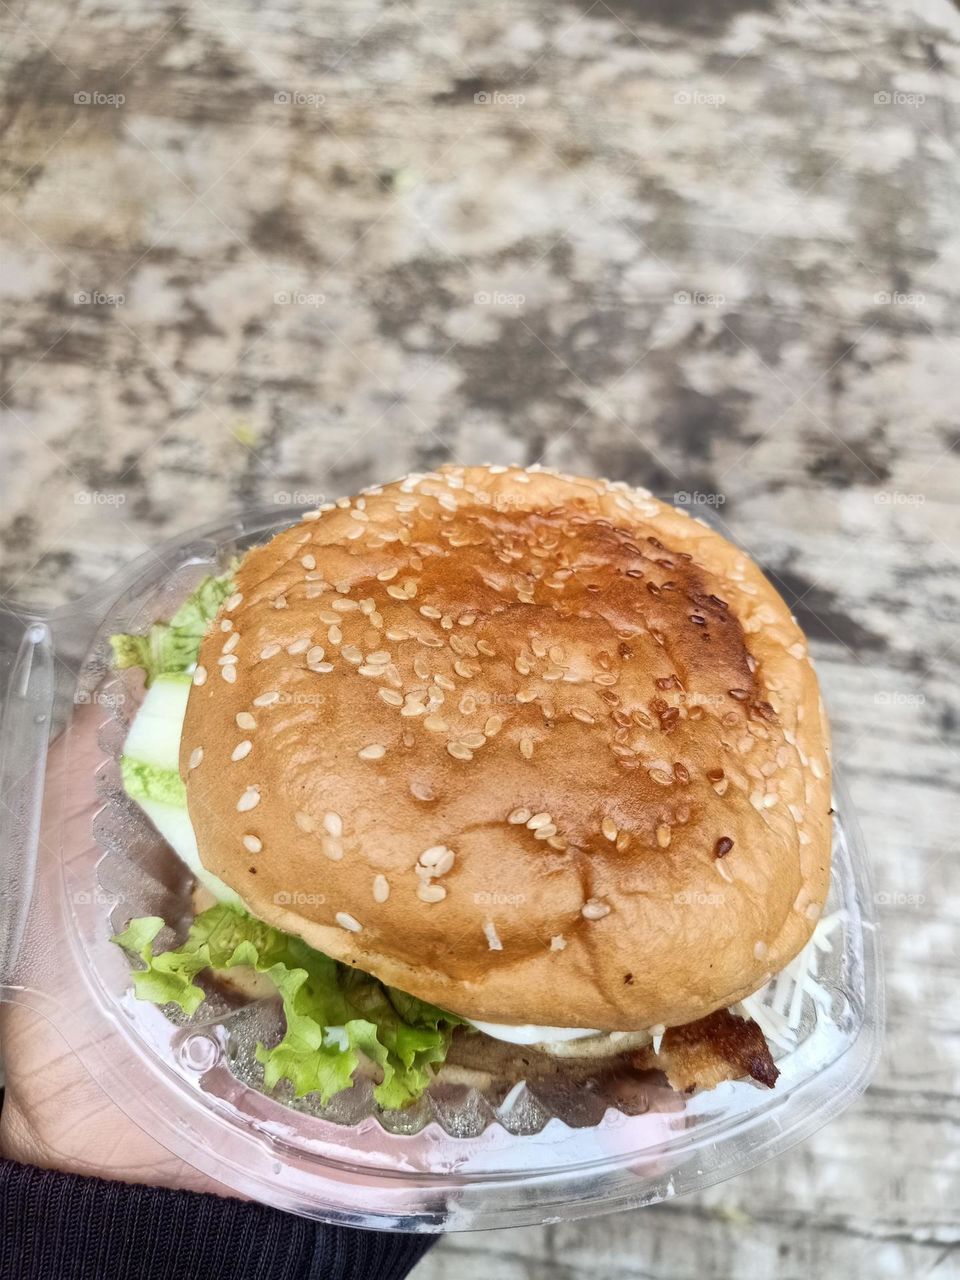 Close-up view of Burger